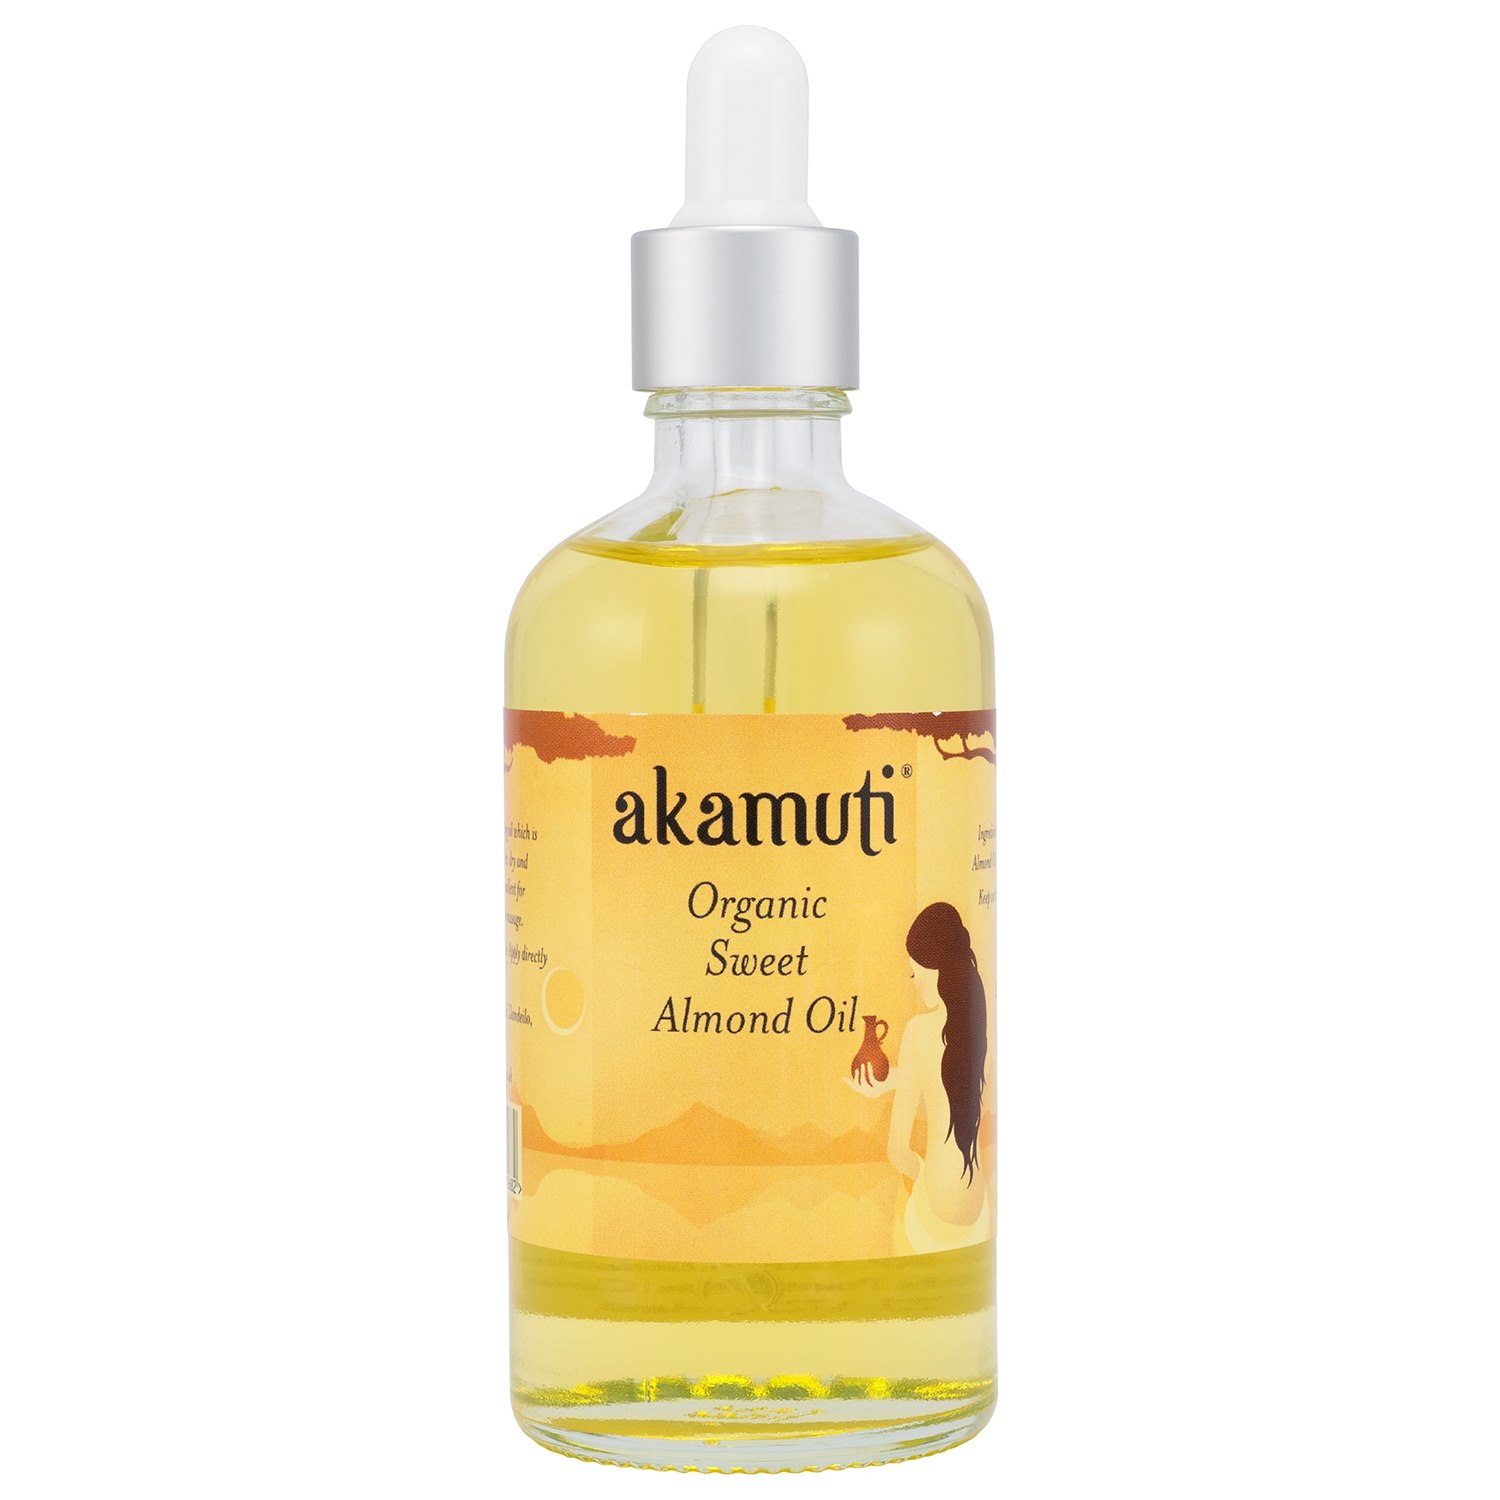 Huile d'Amande Amère (Bitter Almond Oil) - 30 ml - 100% Naturelle - Hemani